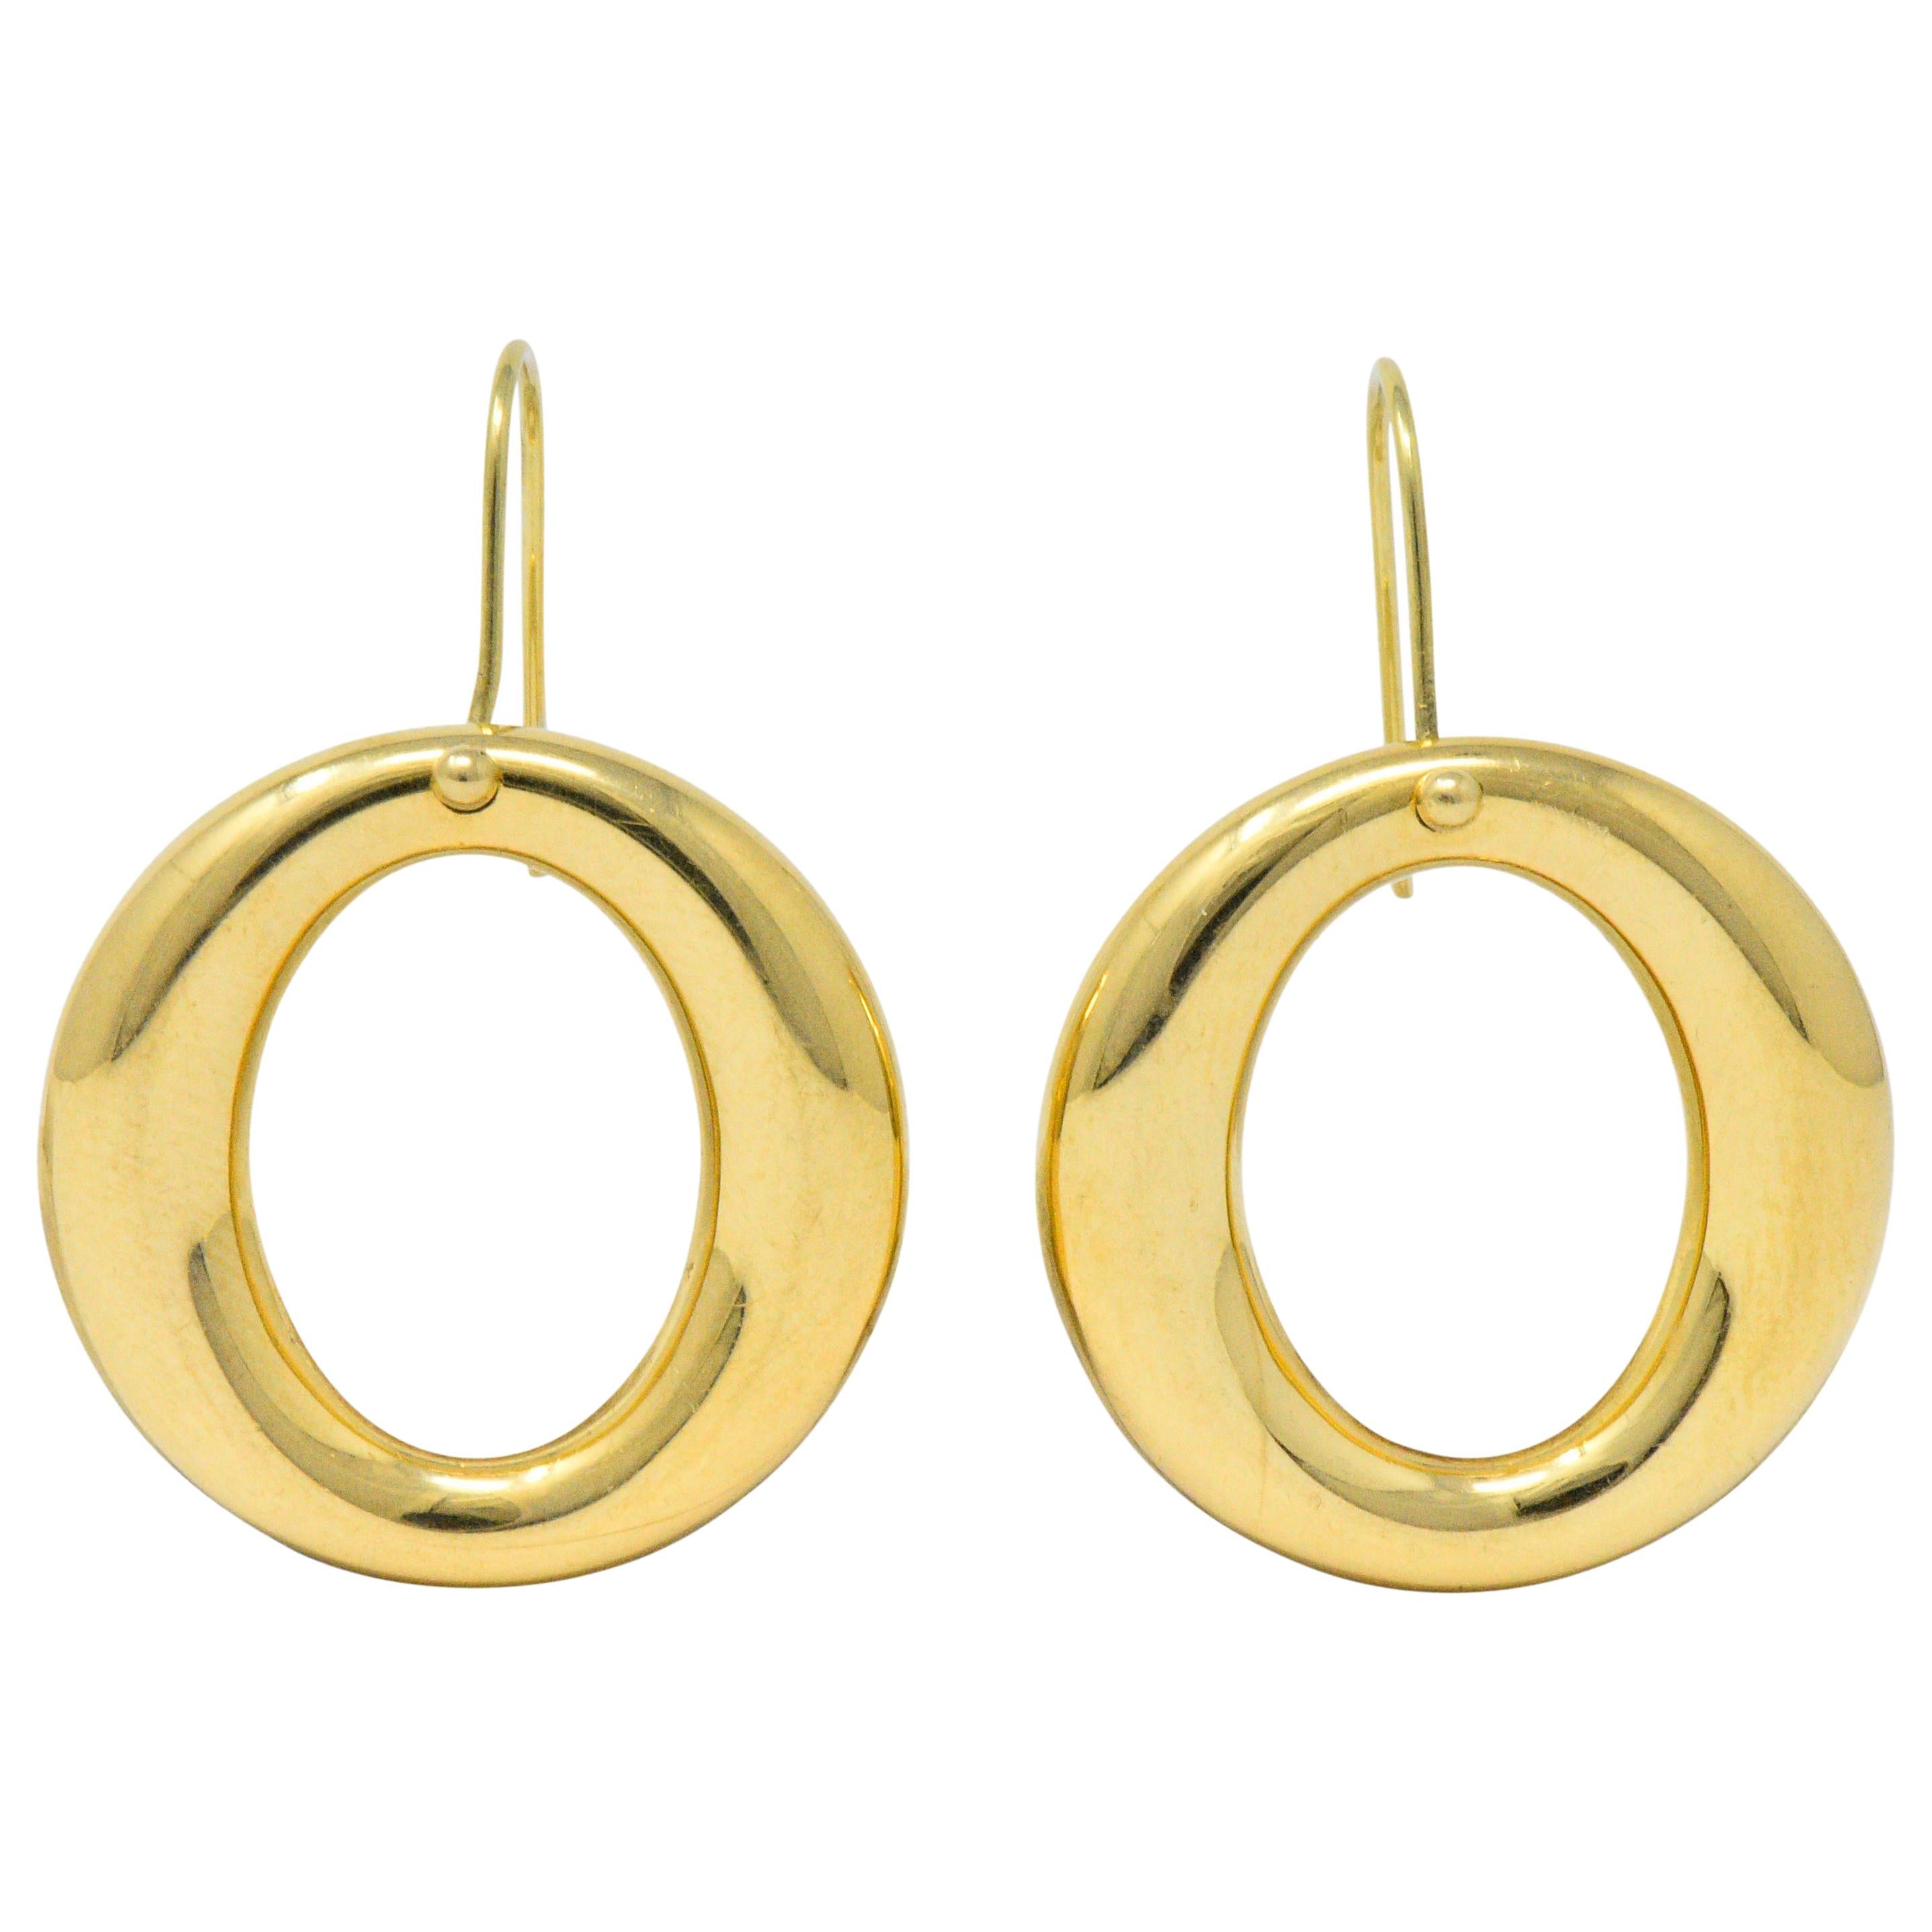 Elsa Peretti Tiffany & Co. 18 Karat Gold Sevillana Drop Earrings